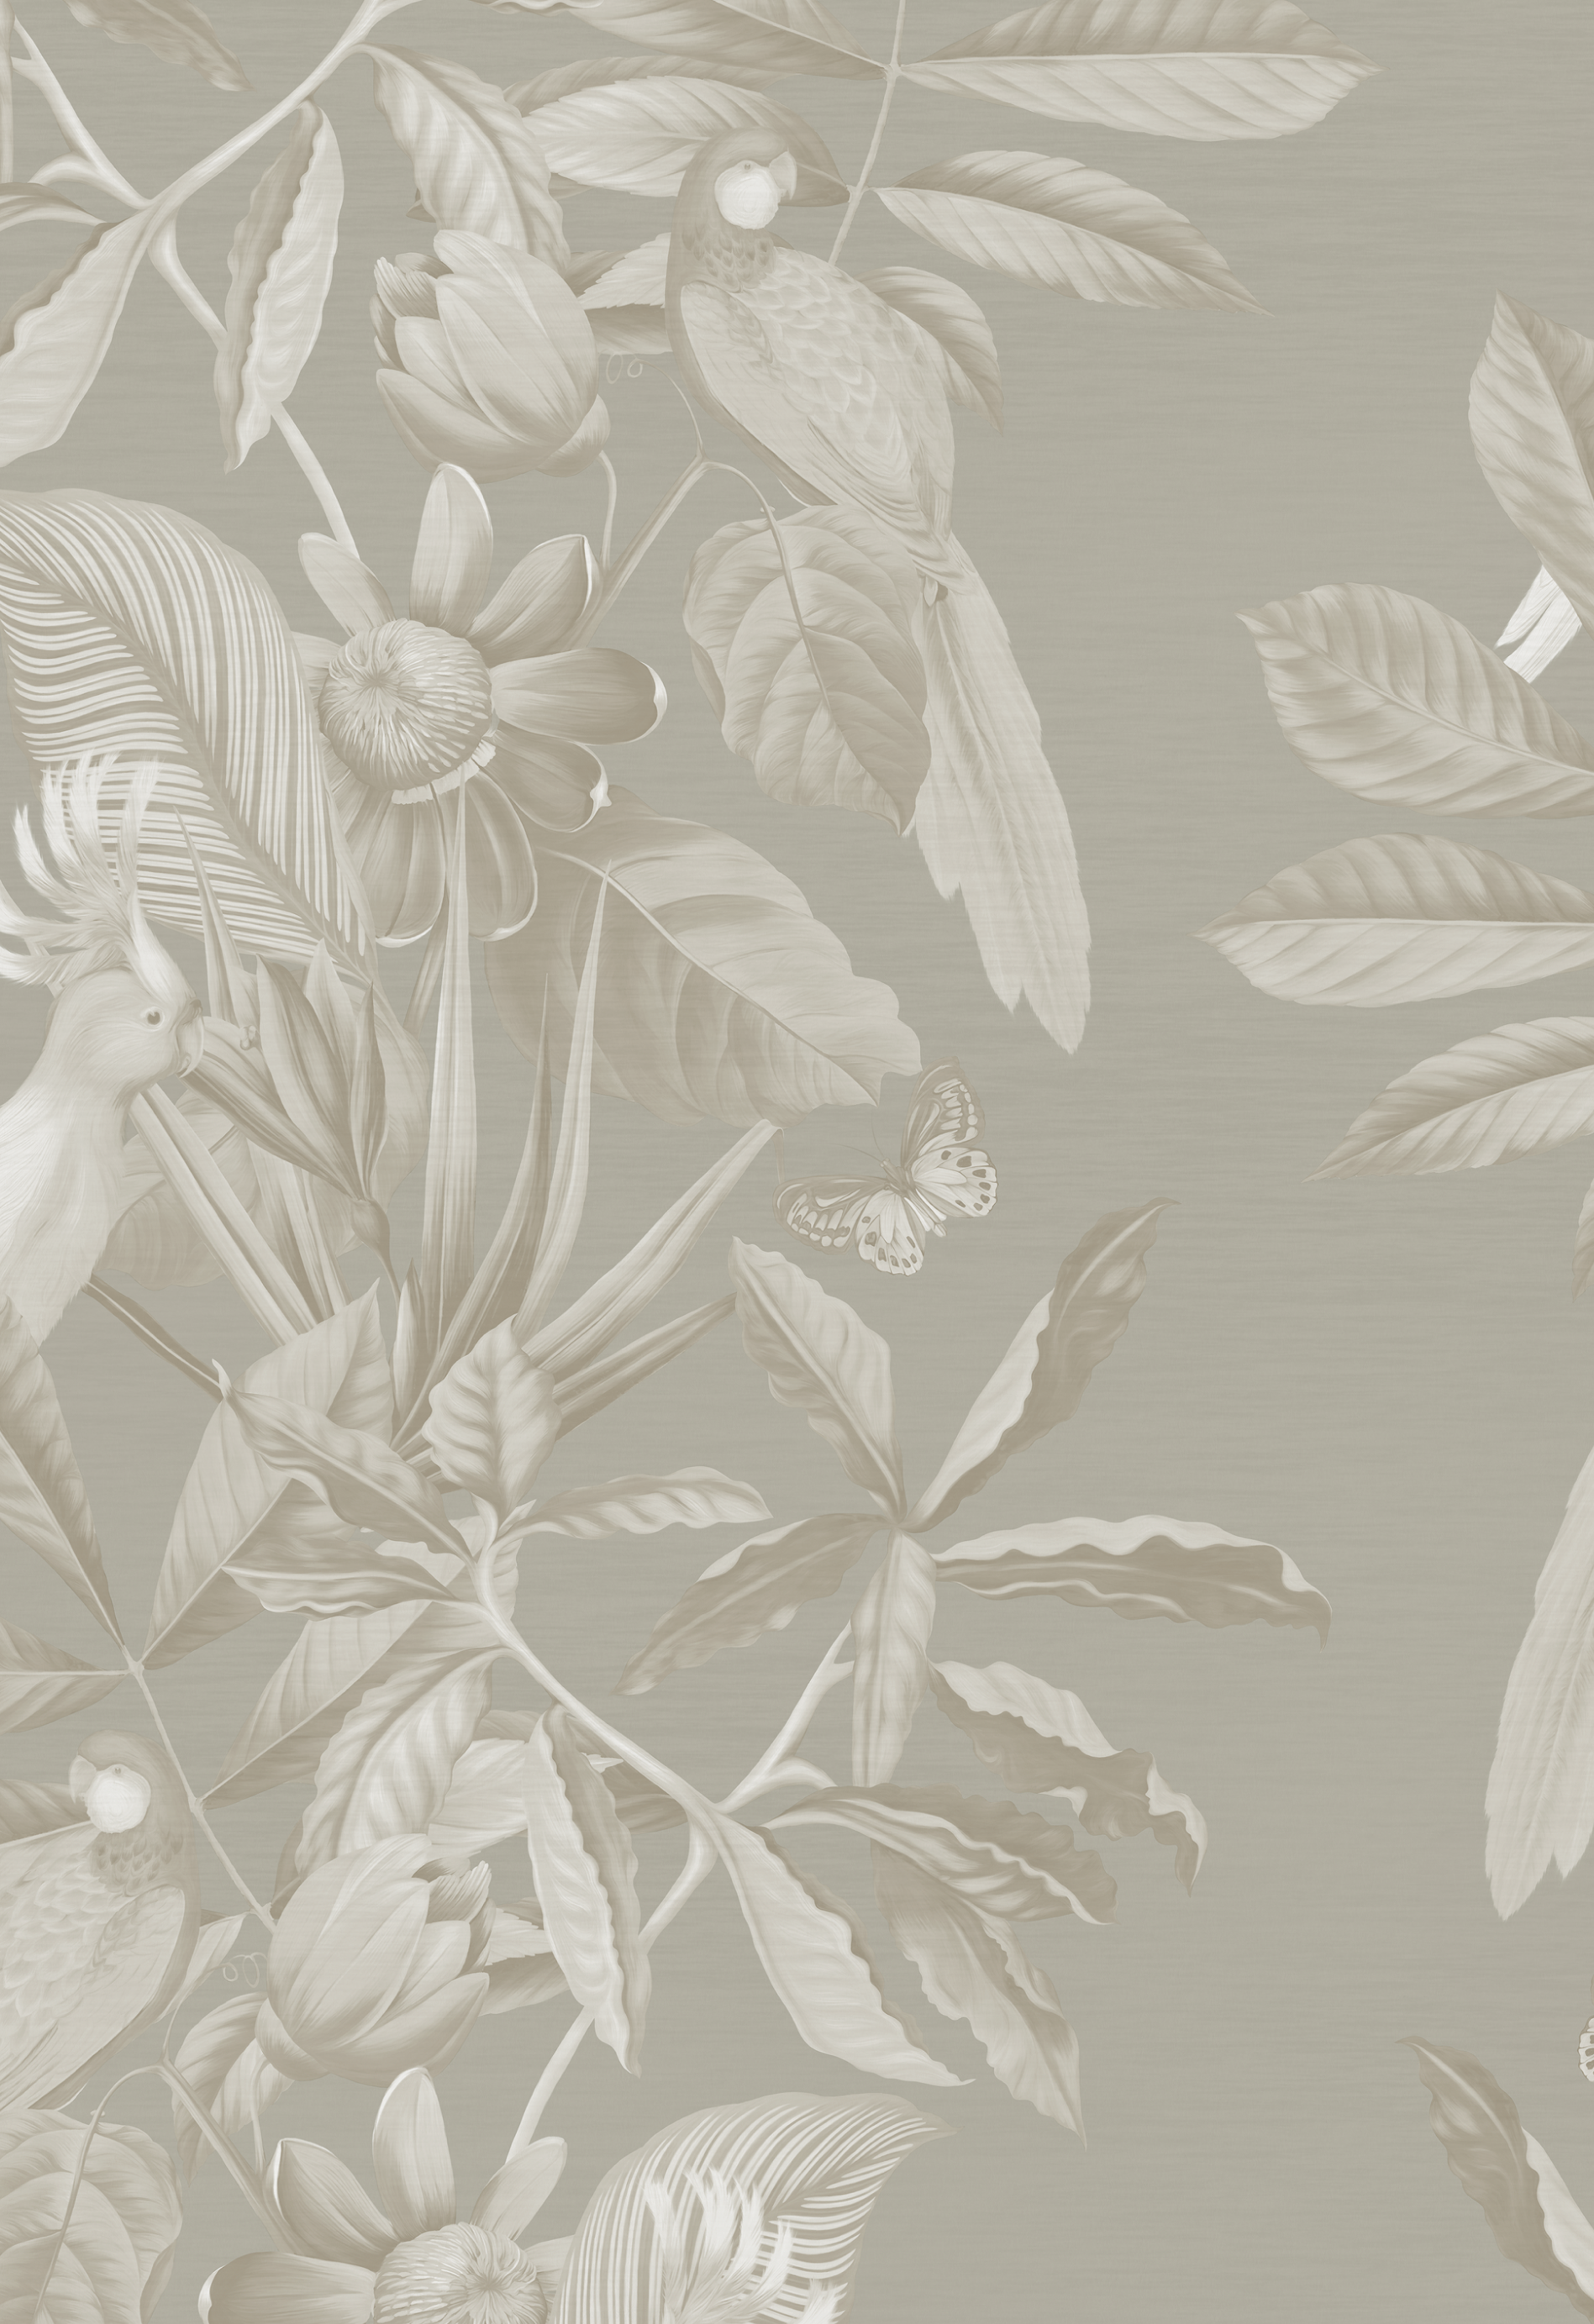 Tropical luxury grey wallpaper of birds, flowers and leaves by Deus ex Gardenia of Passiflora in Ammonite.